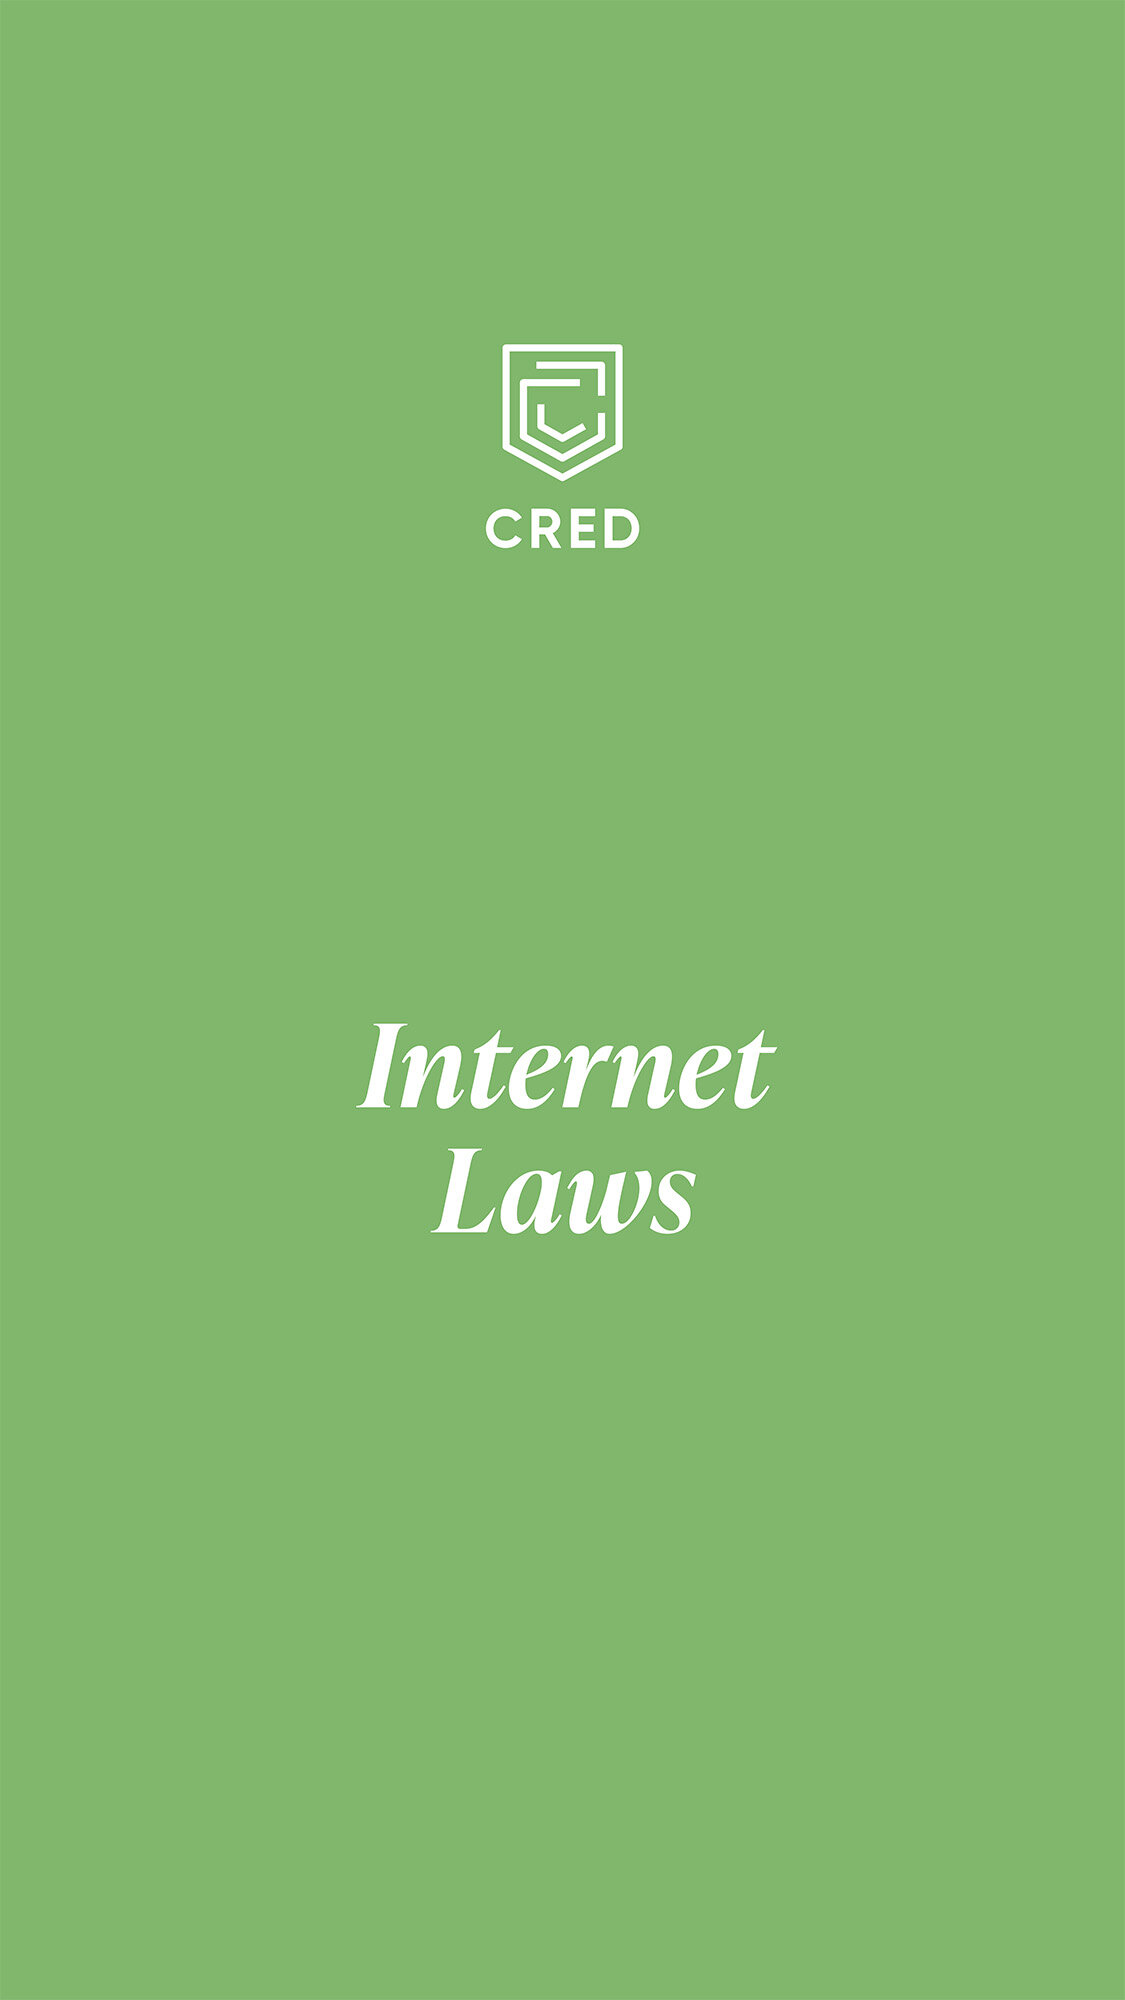 CRED_Rules_Story_InternetLaws-01.jpg